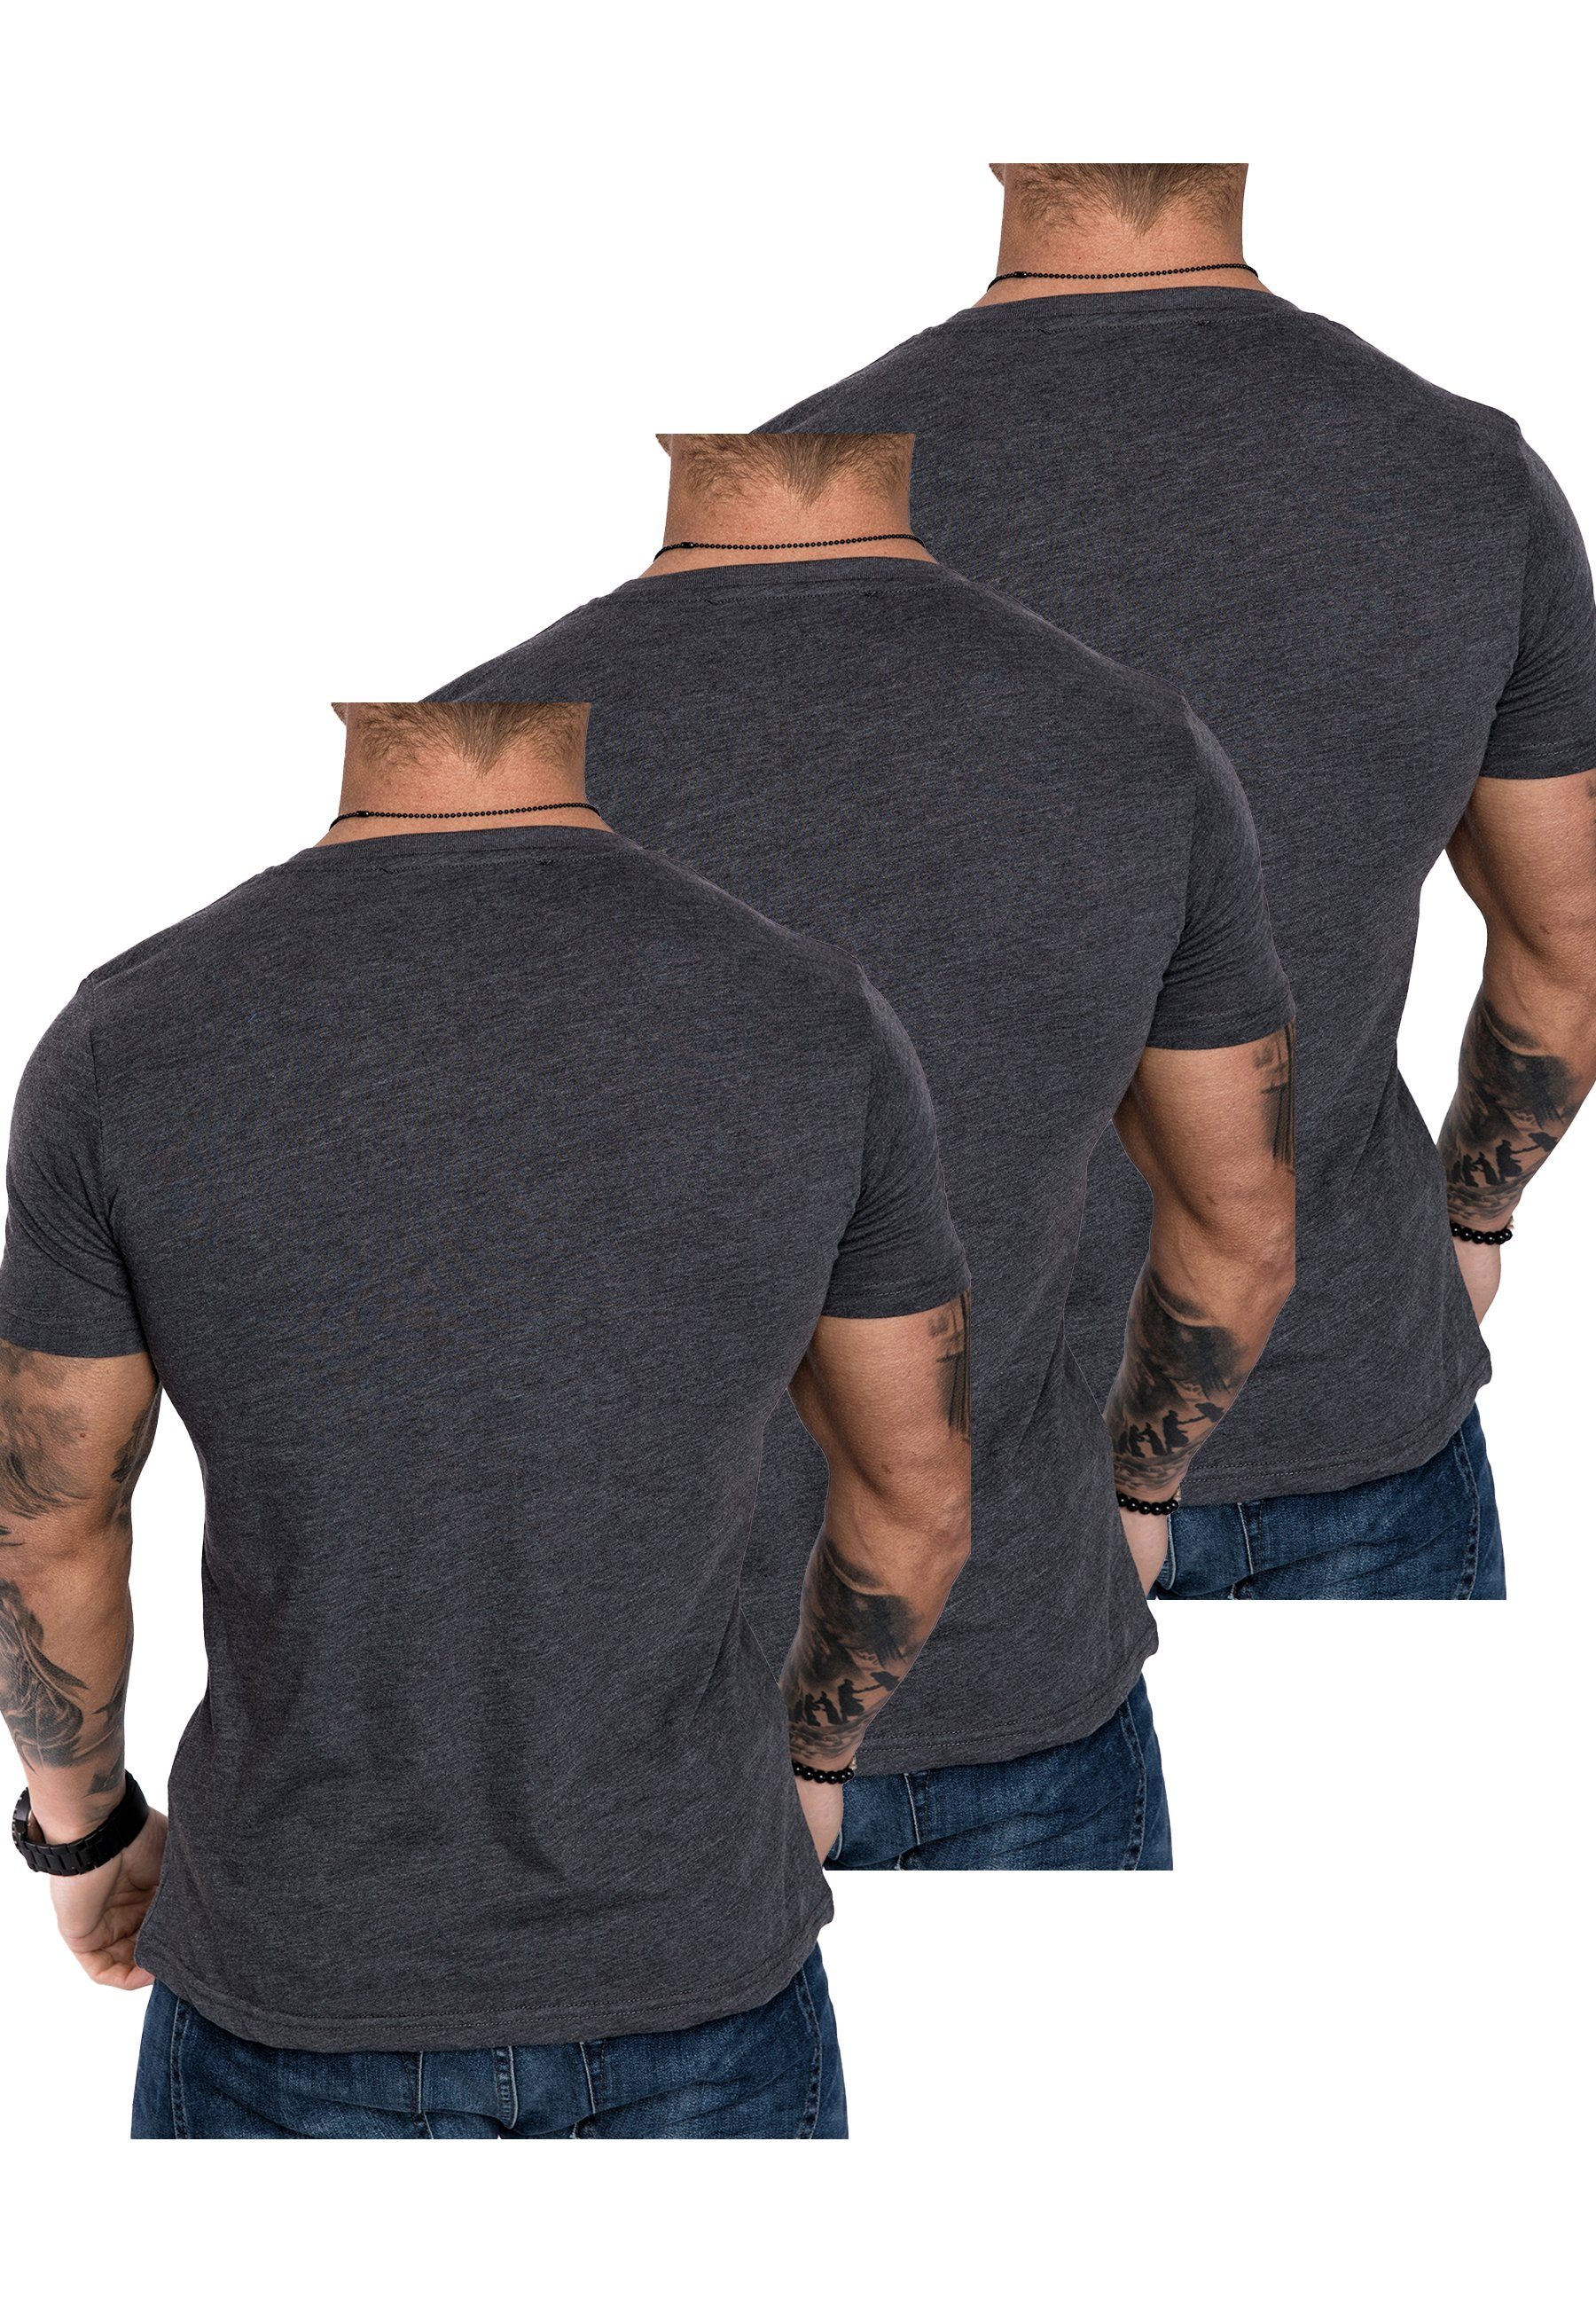 Amaci&Sons T-Shirt 3. Basic 3er-Pack LANCASTER Oversize T-Shirts mit (3er-Pack) Anthrazit) T-Shirt Rundhalsausschnitt Herren (3x